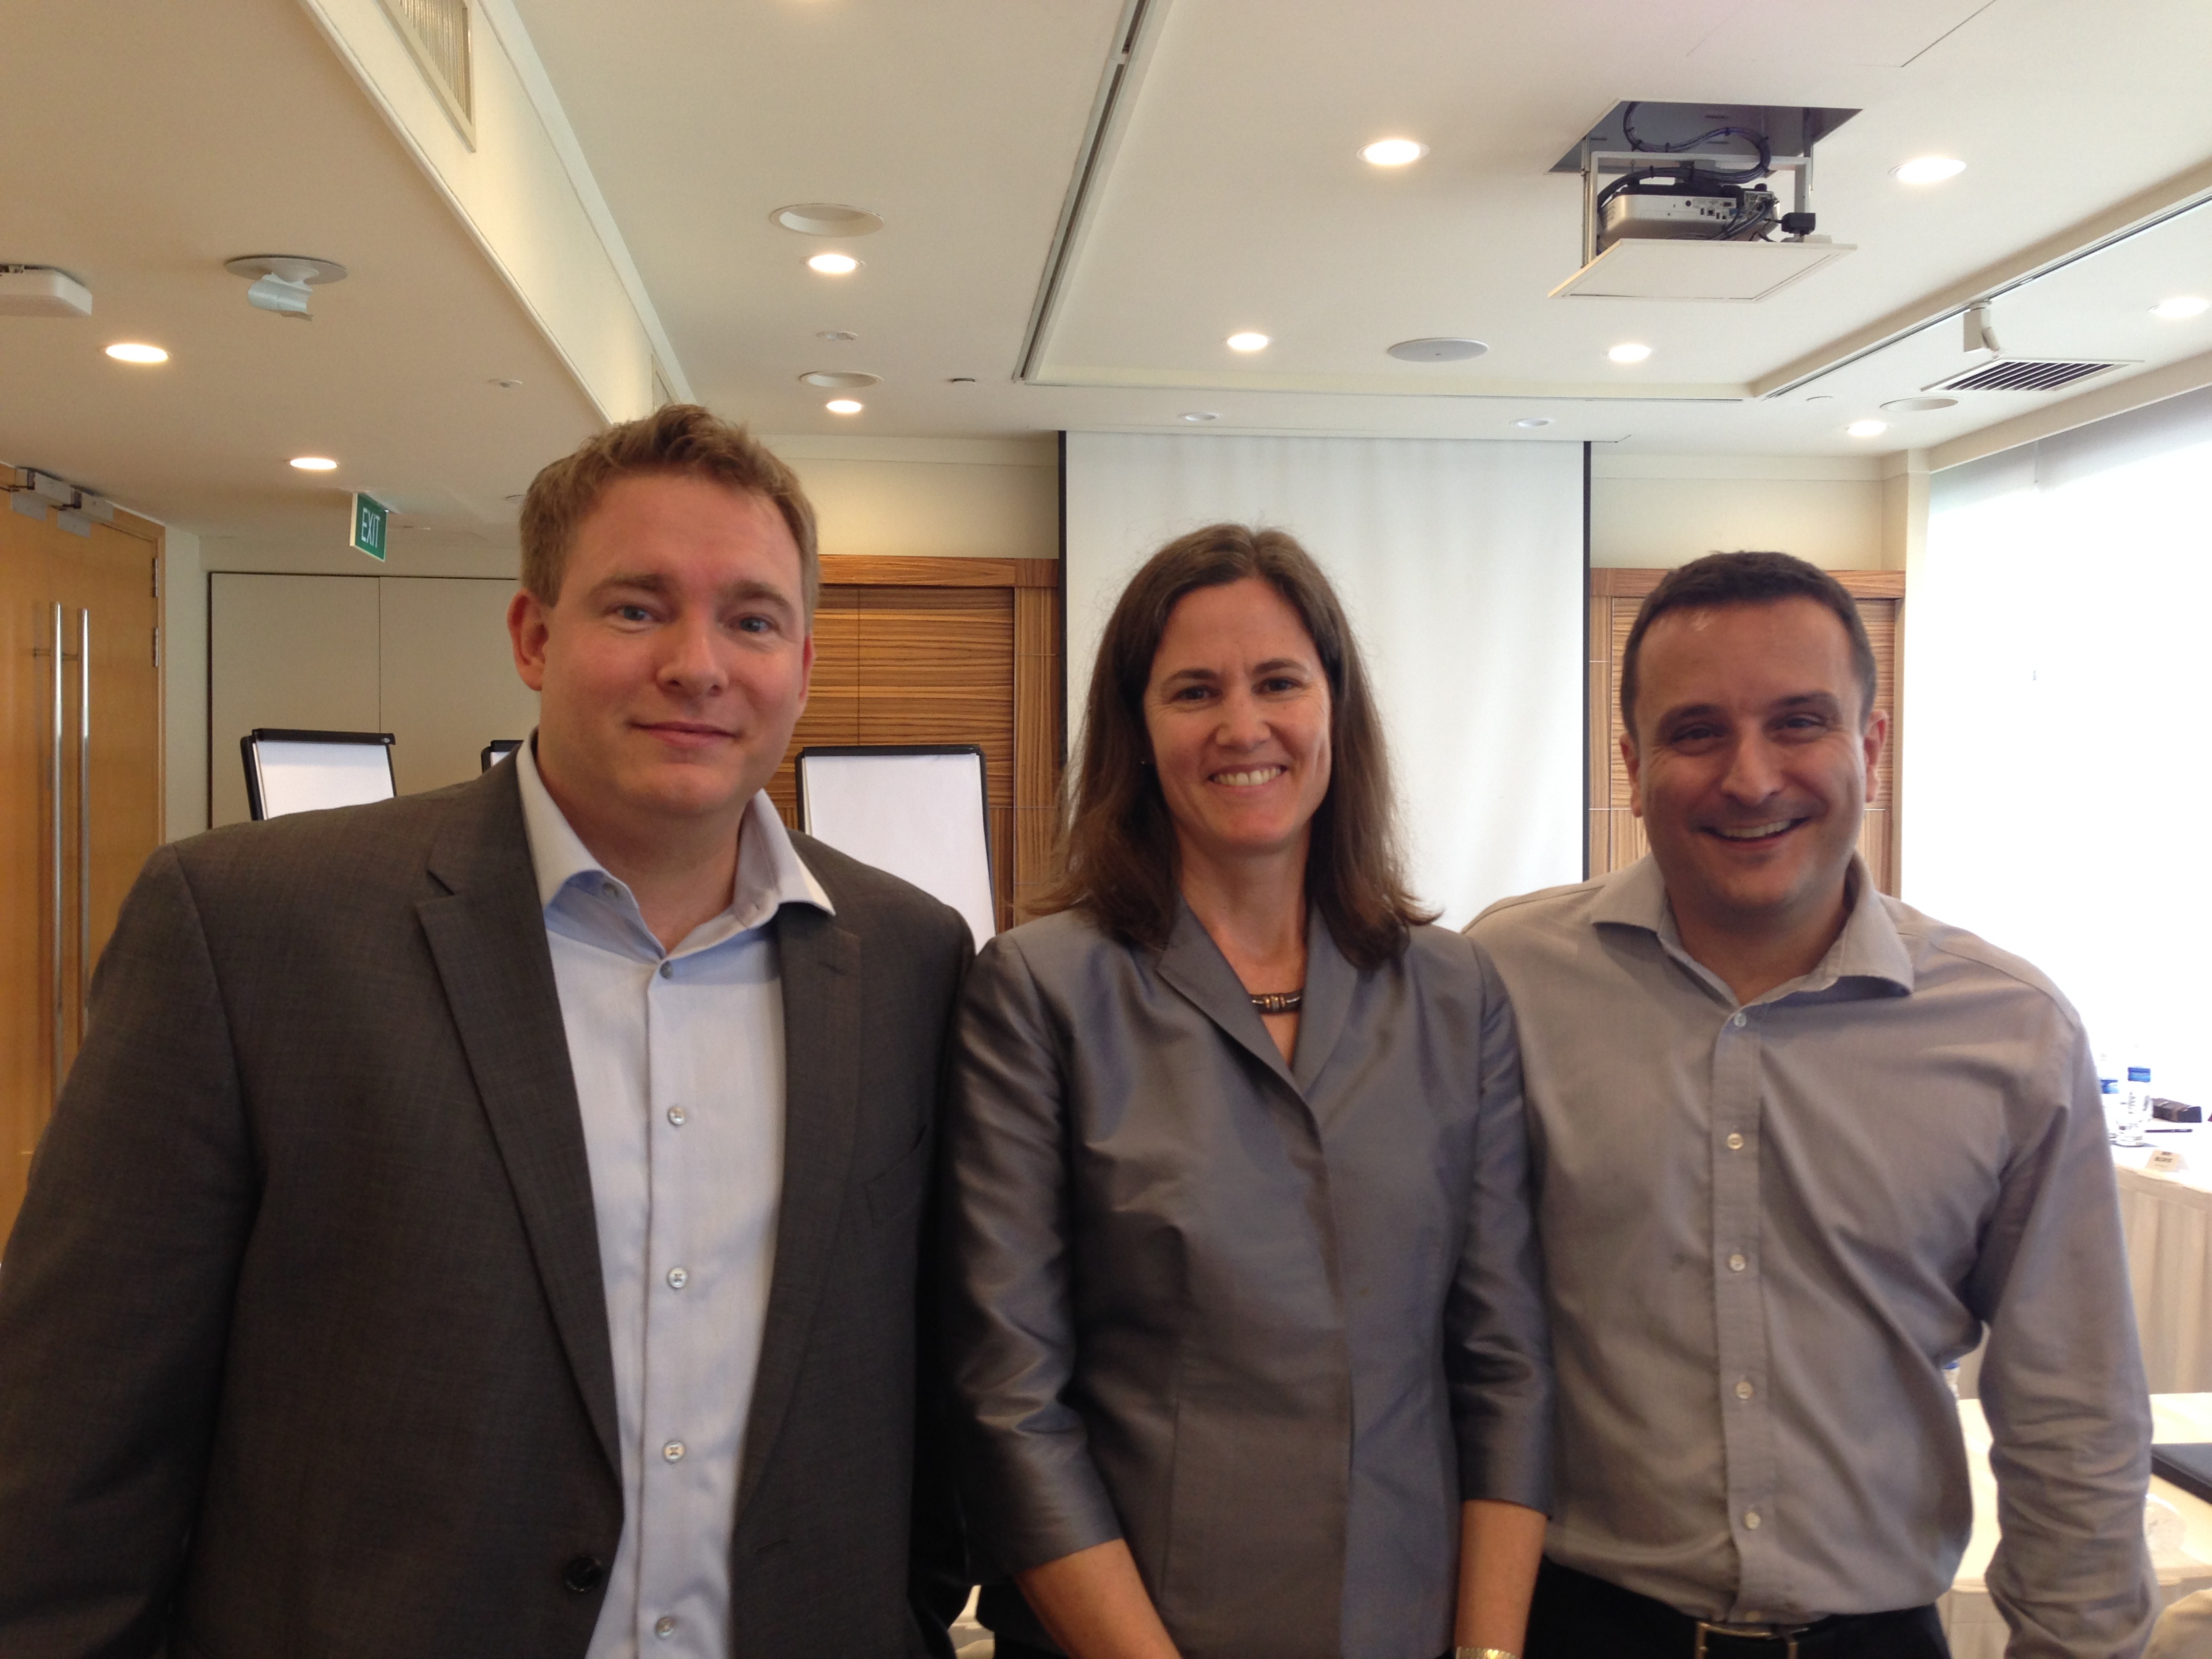 Darden alumni Bob Jordan (D ‘08), Matthew Aujla (D’ 01) and Erika Herz (D ’01) at the Global Innovators’ Roundtable